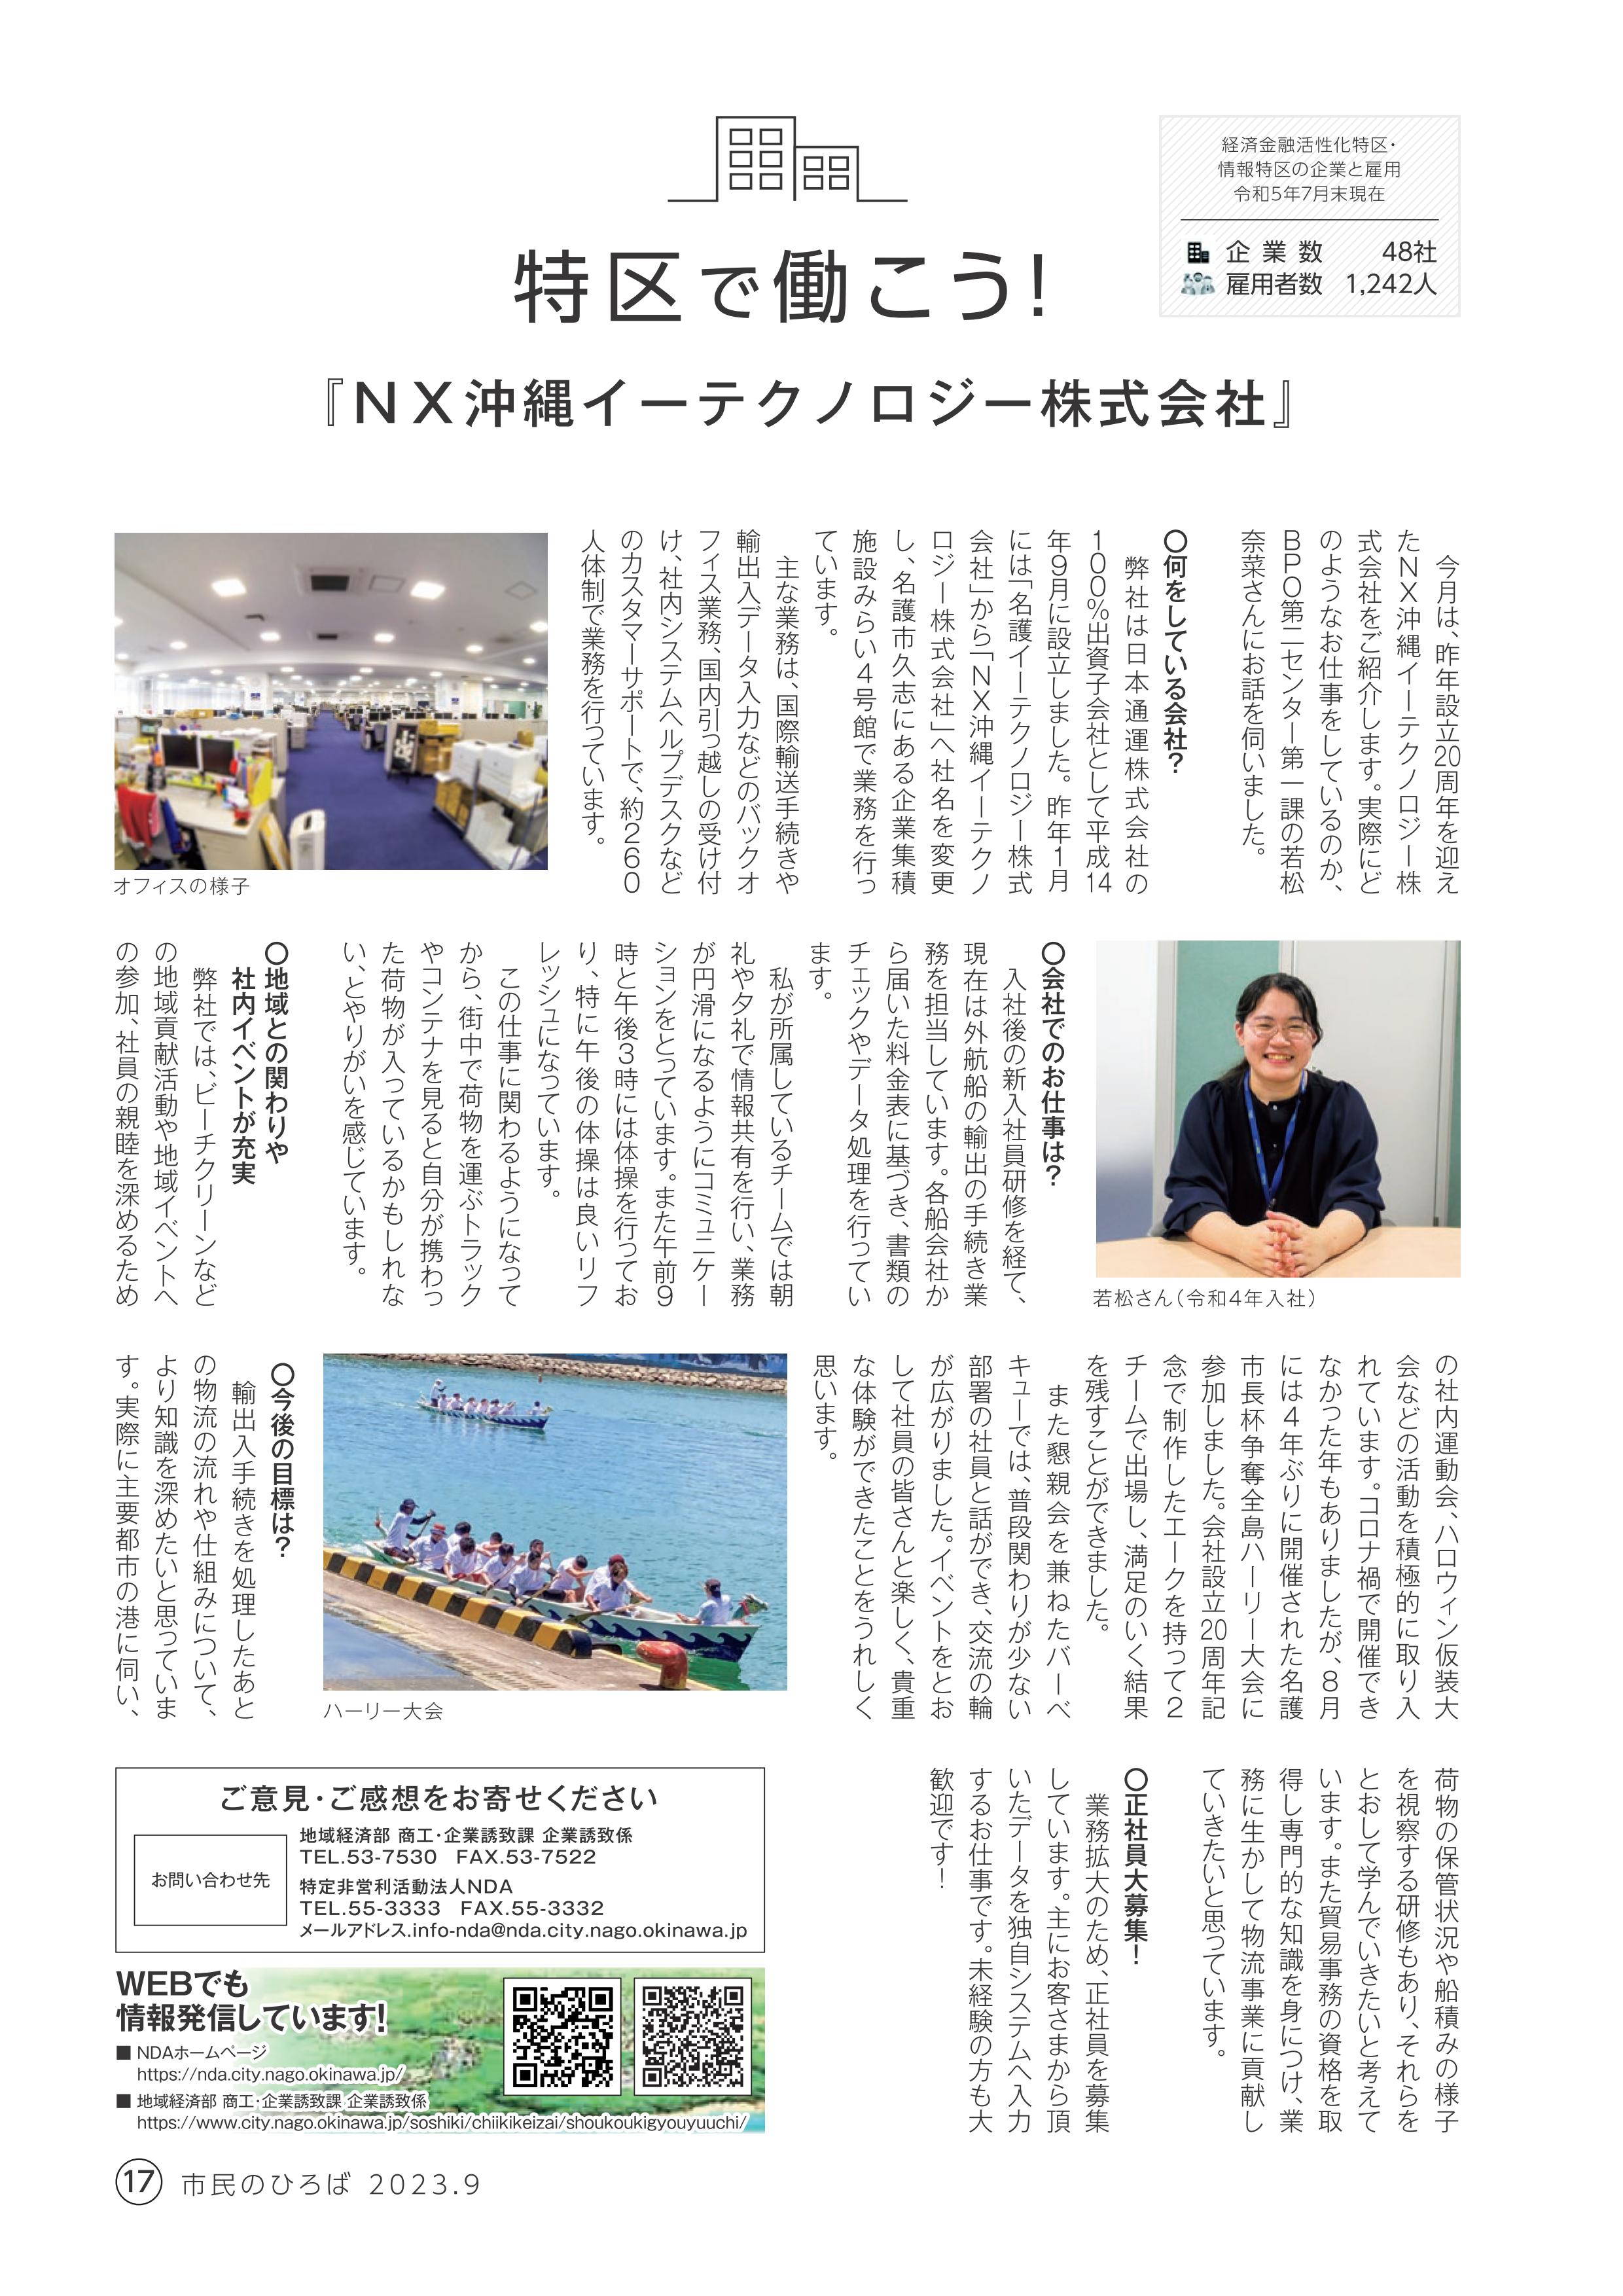 <p>2023年度9月号</p>

<p>『NX沖縄イーテクノロジー株式会社』</p>
